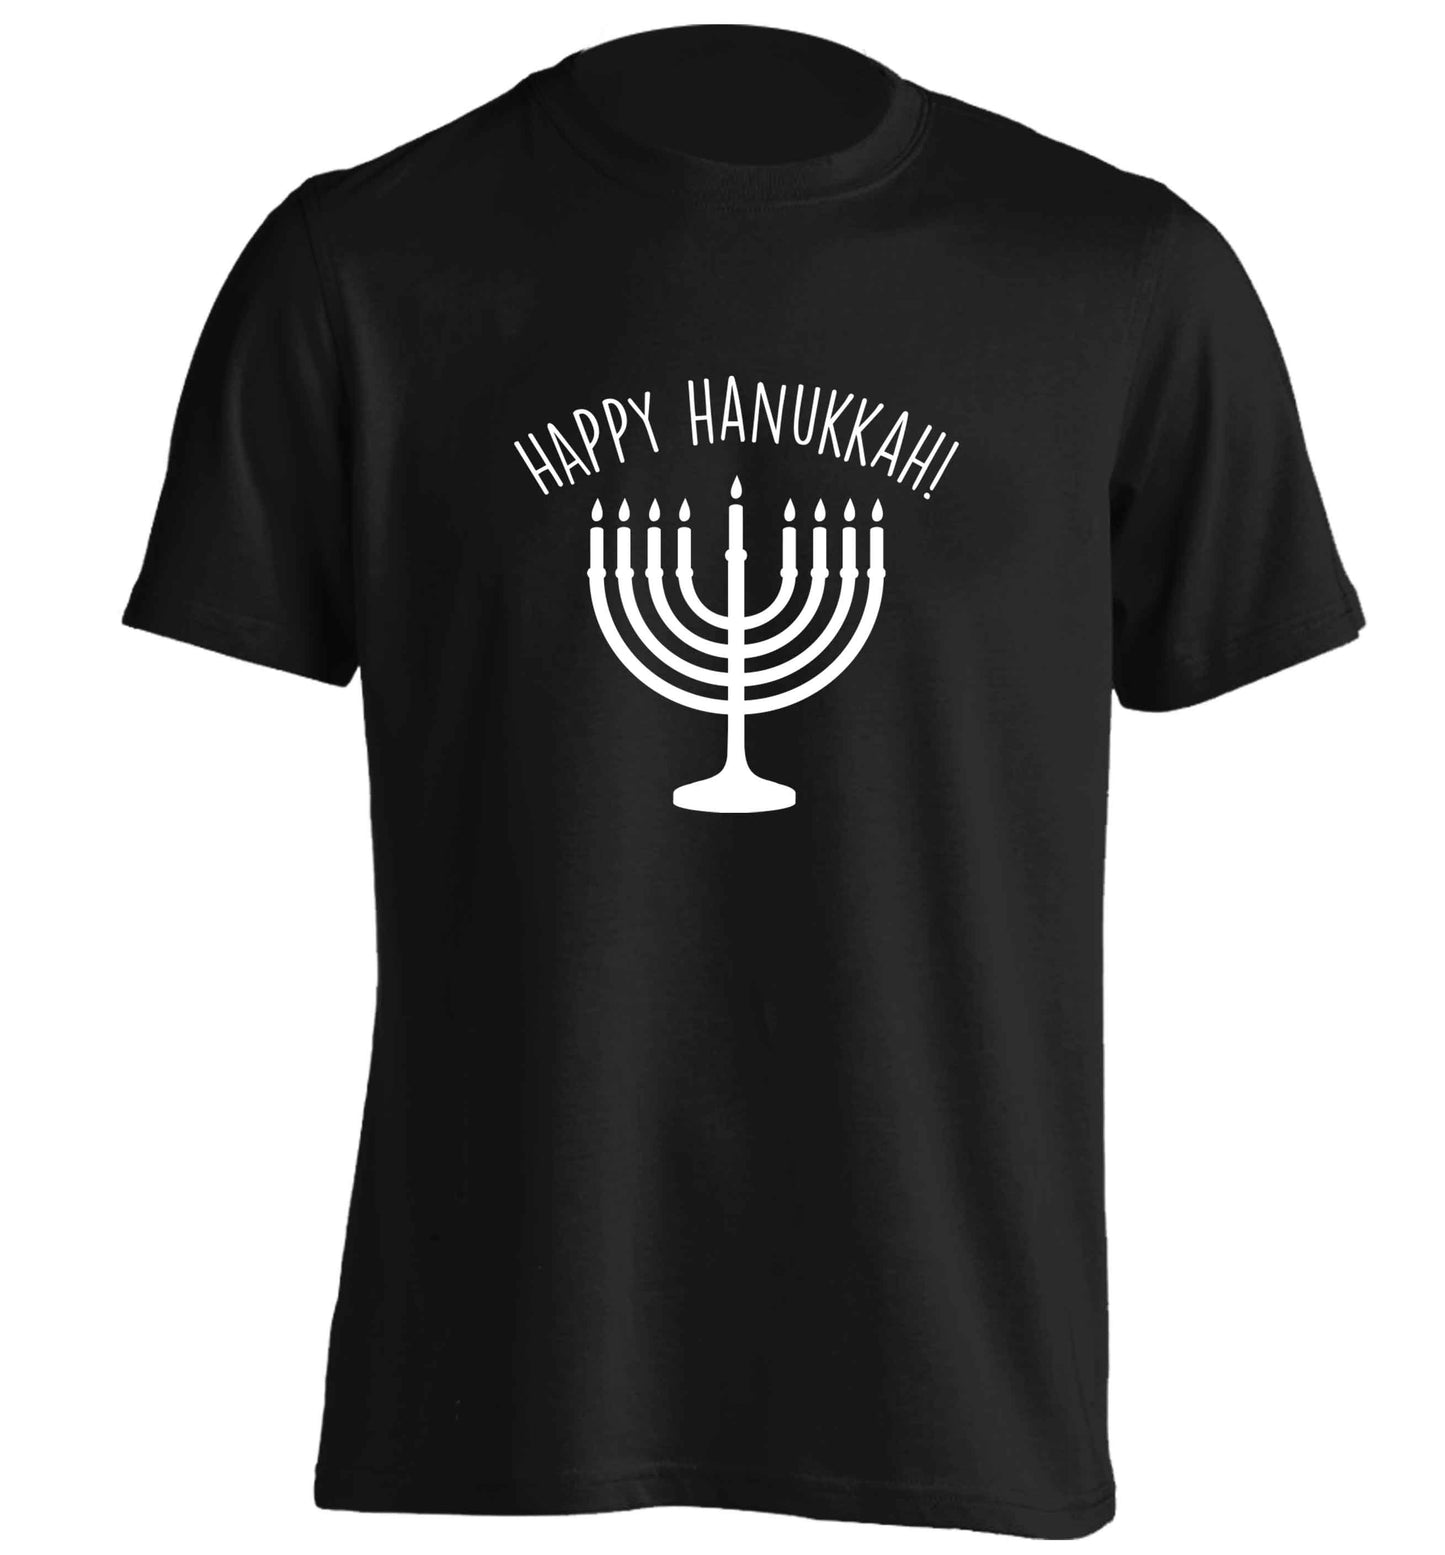 Happy hanukkah adults unisex black Tshirt 2XL